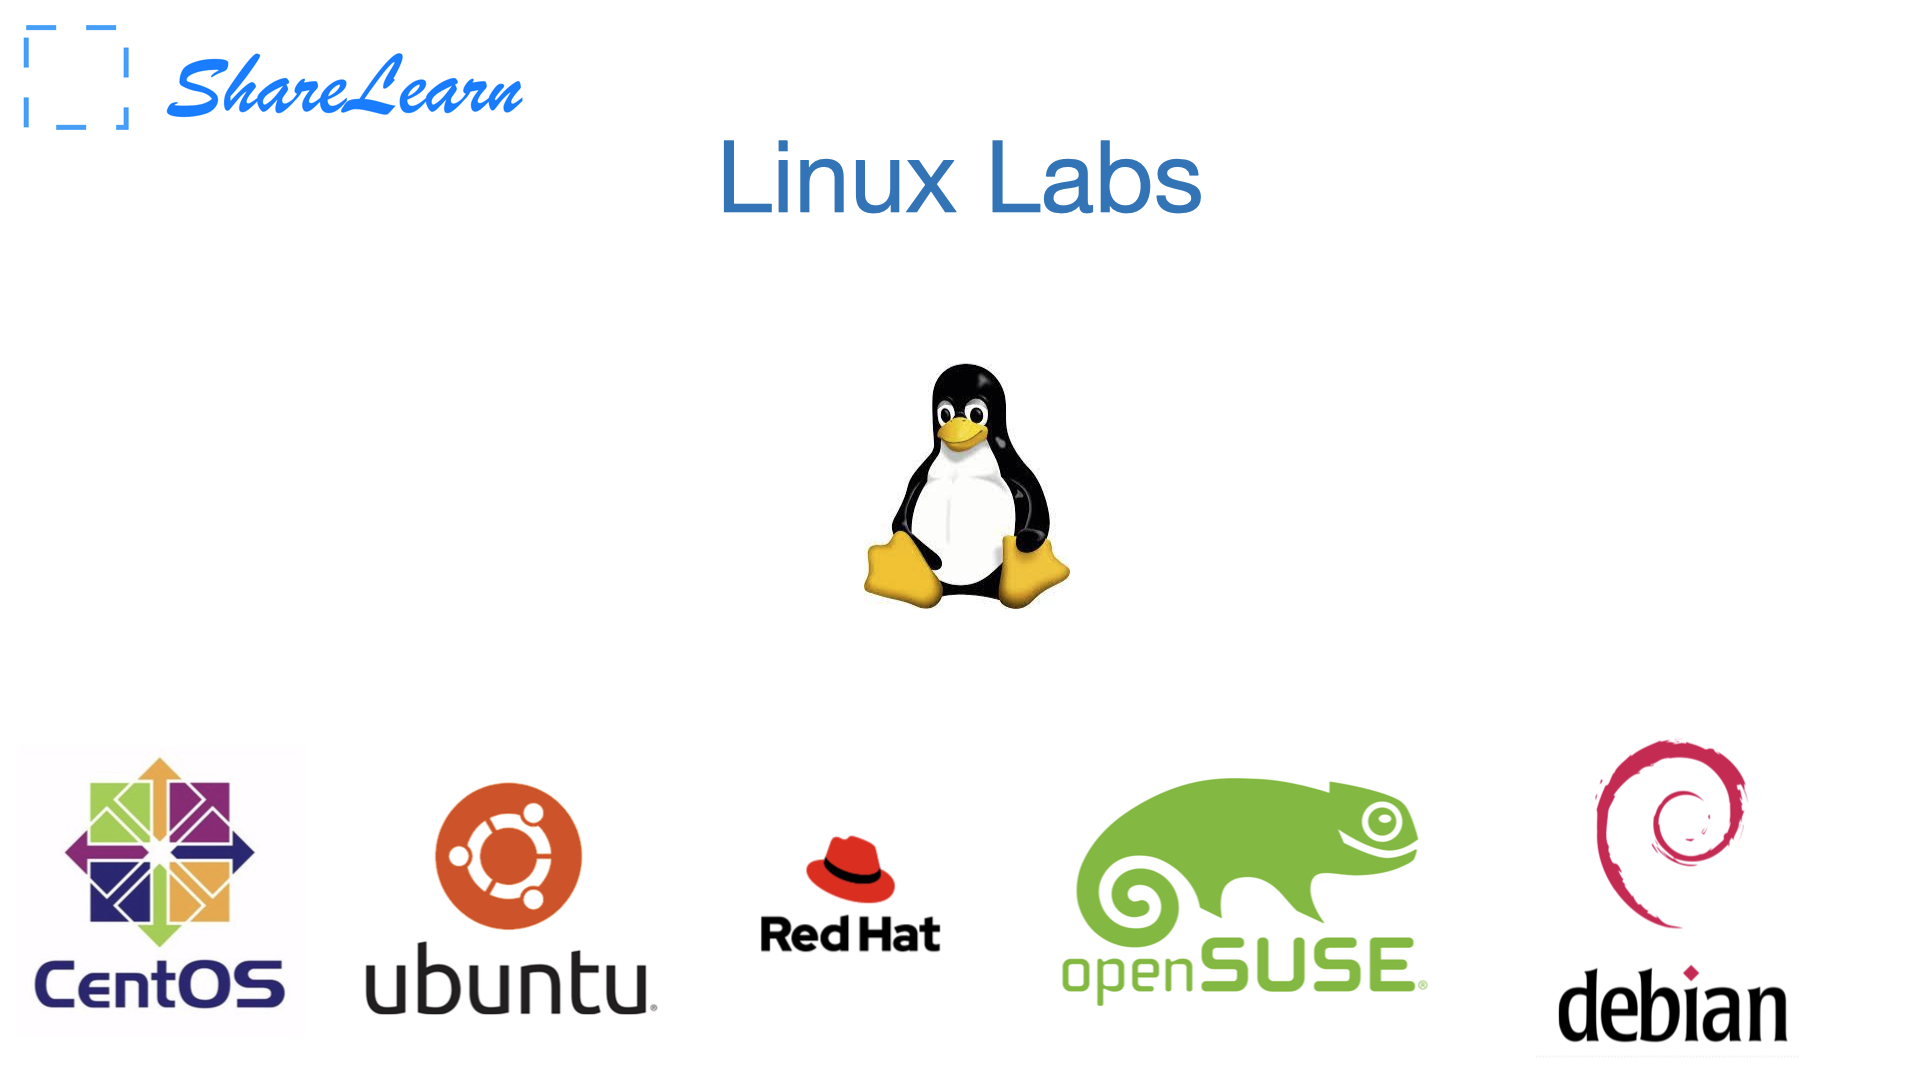 Linuxlabs